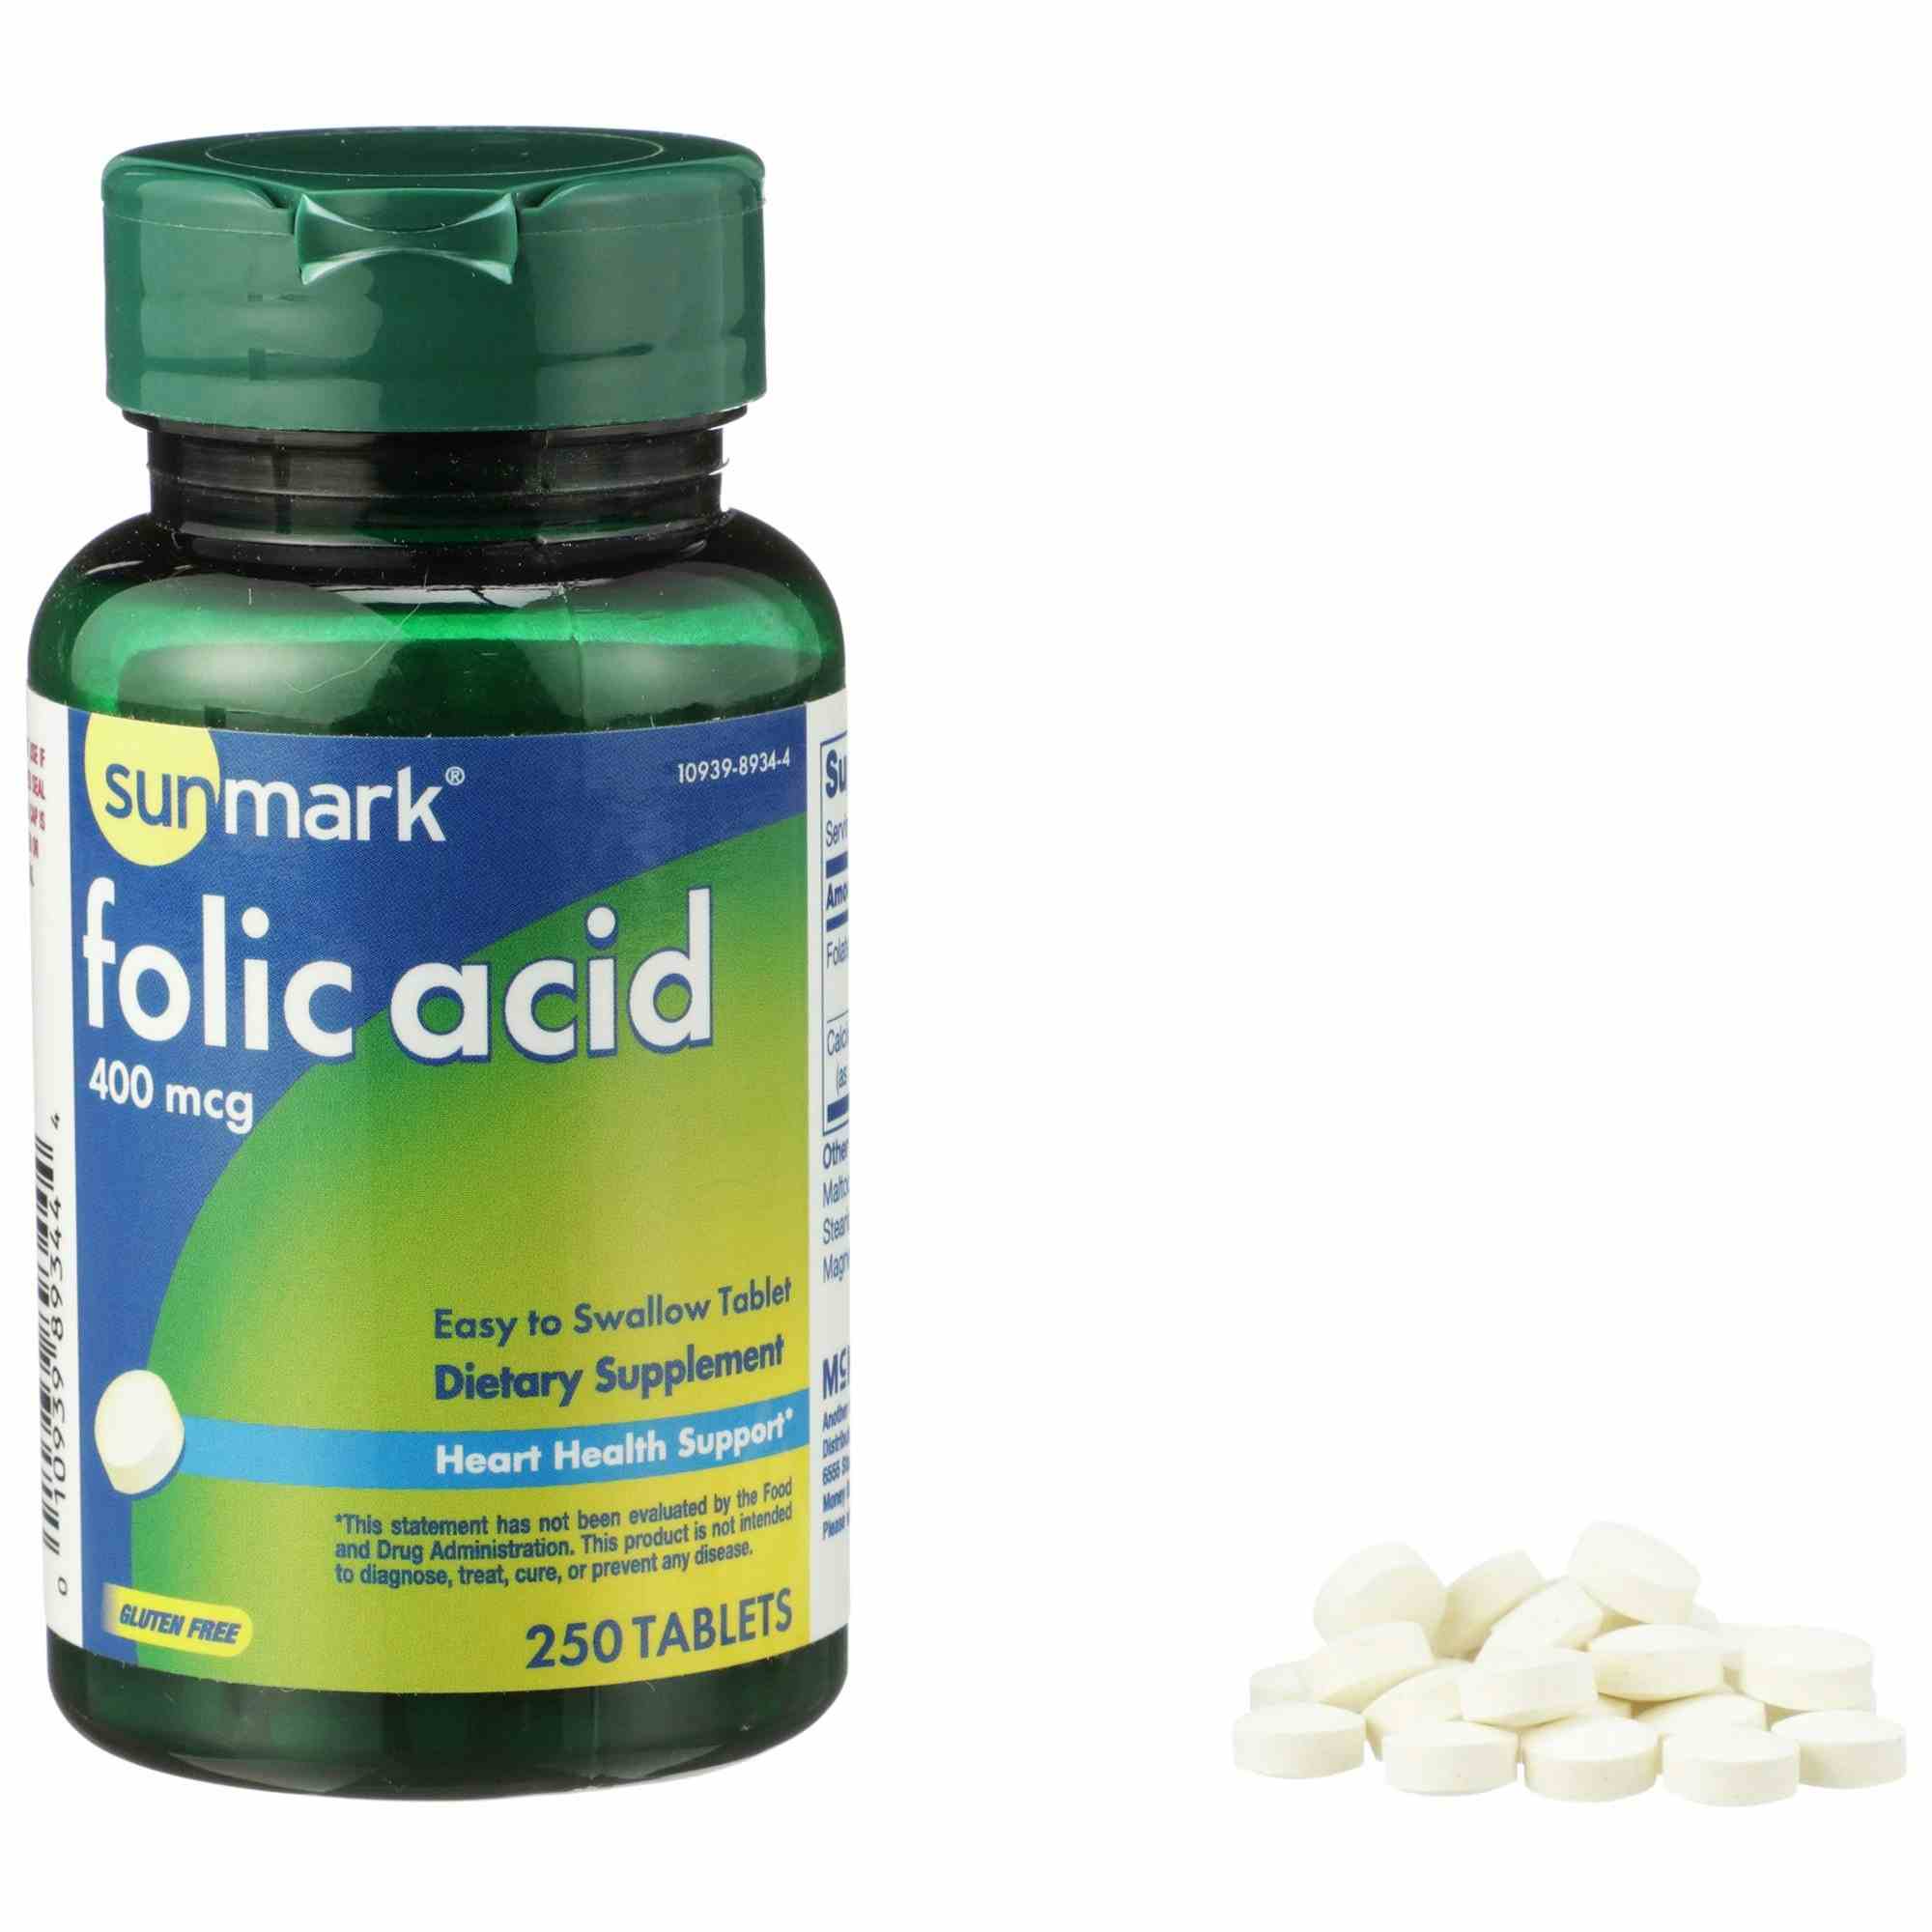 Sunmark Folic Acid Dietary Supplement, 400 mcg, 250 Tablets, 1093989344, 1 Bottle